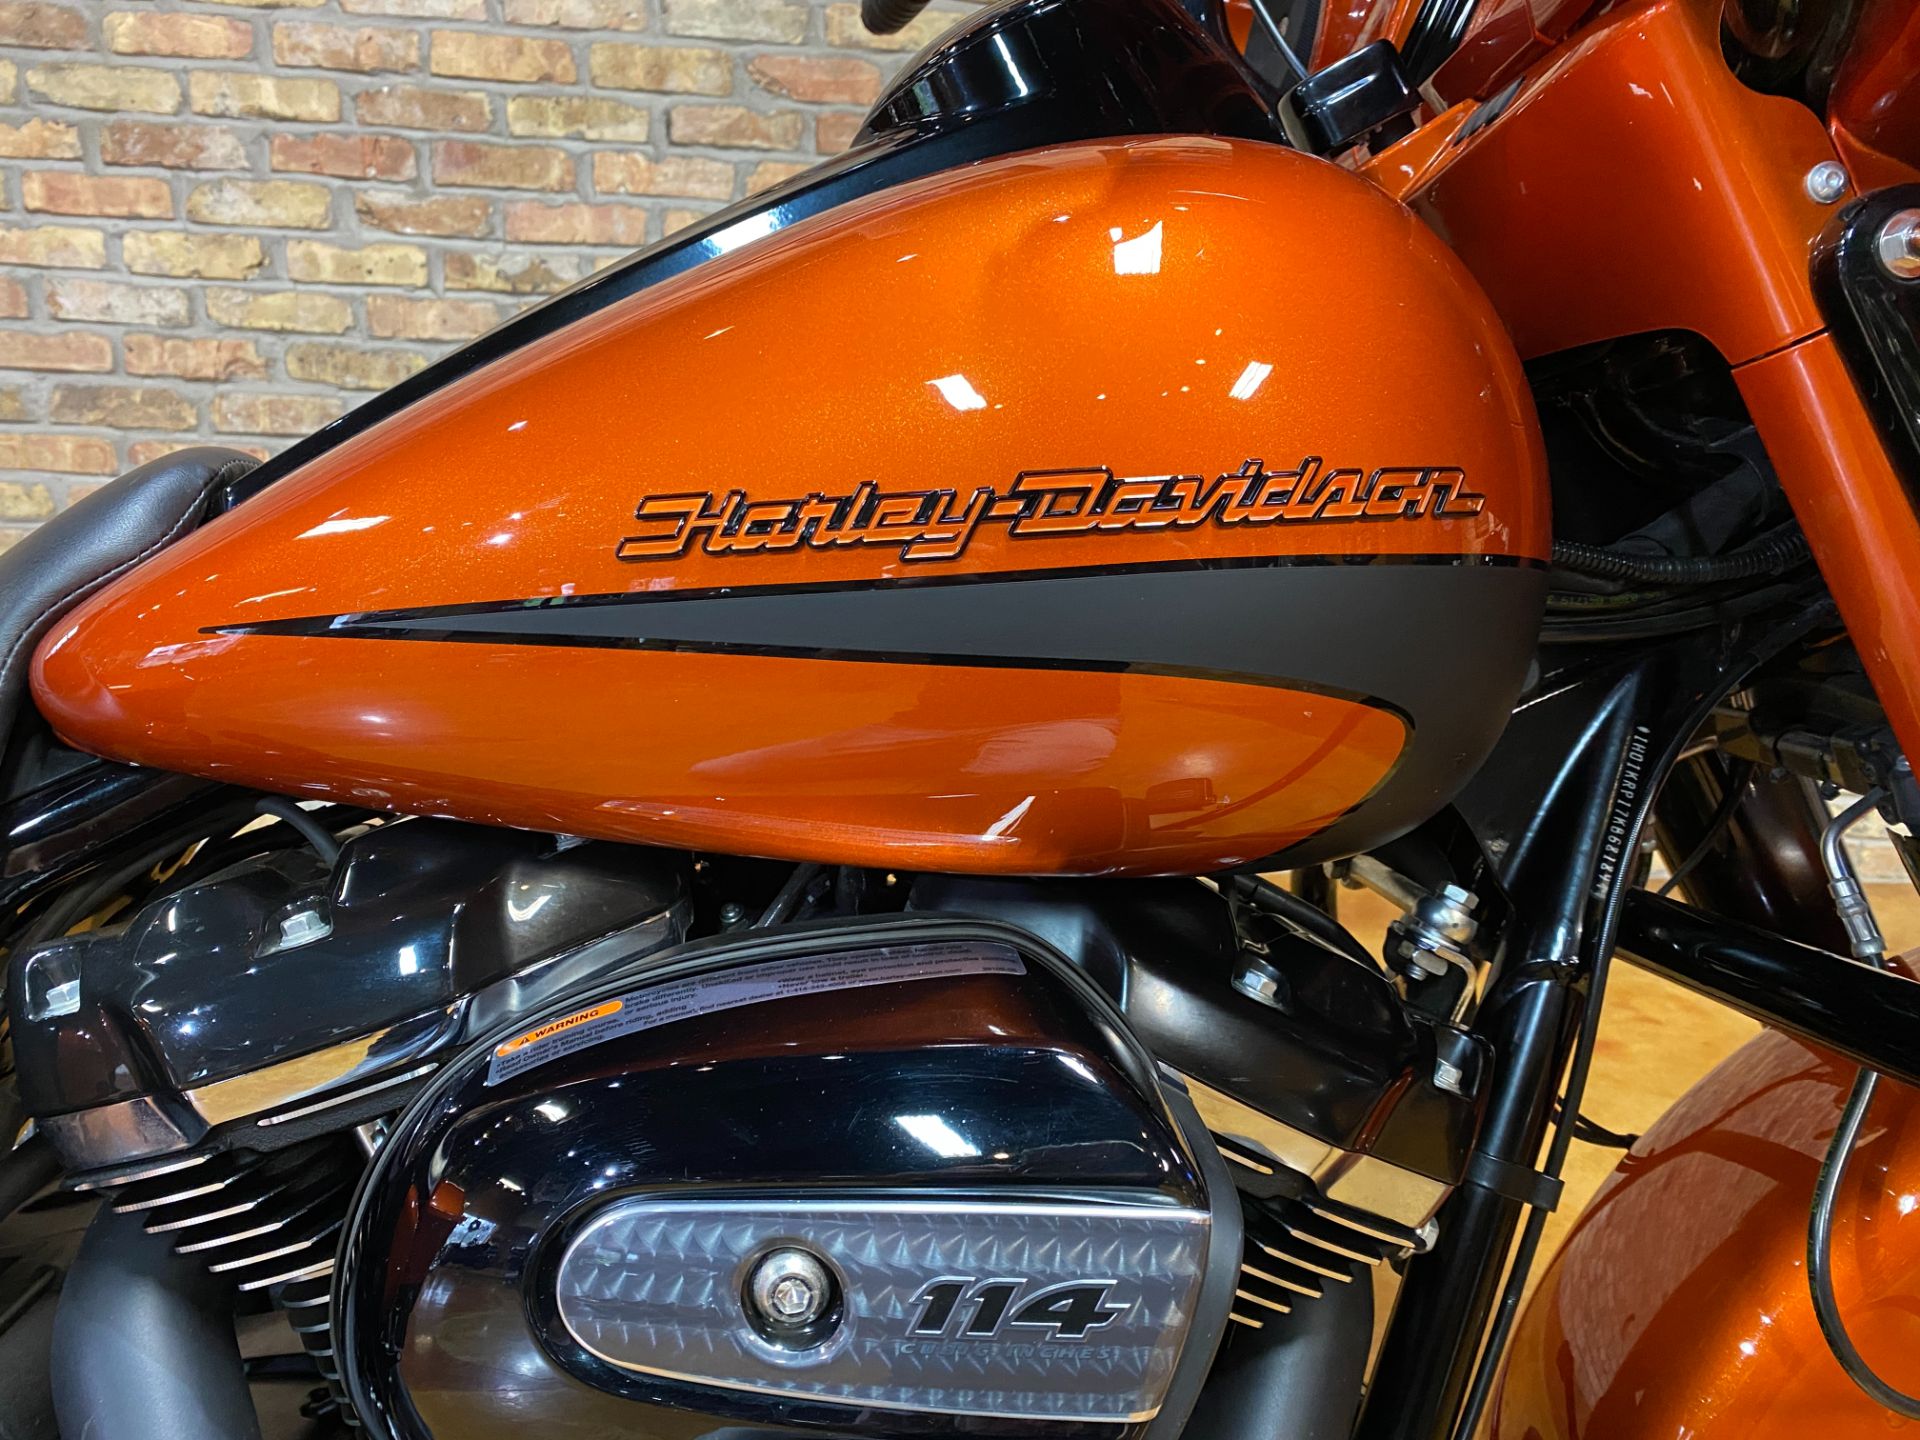 2019 Harley-Davidson Street Glide® Special in Big Bend, Wisconsin - Photo 17